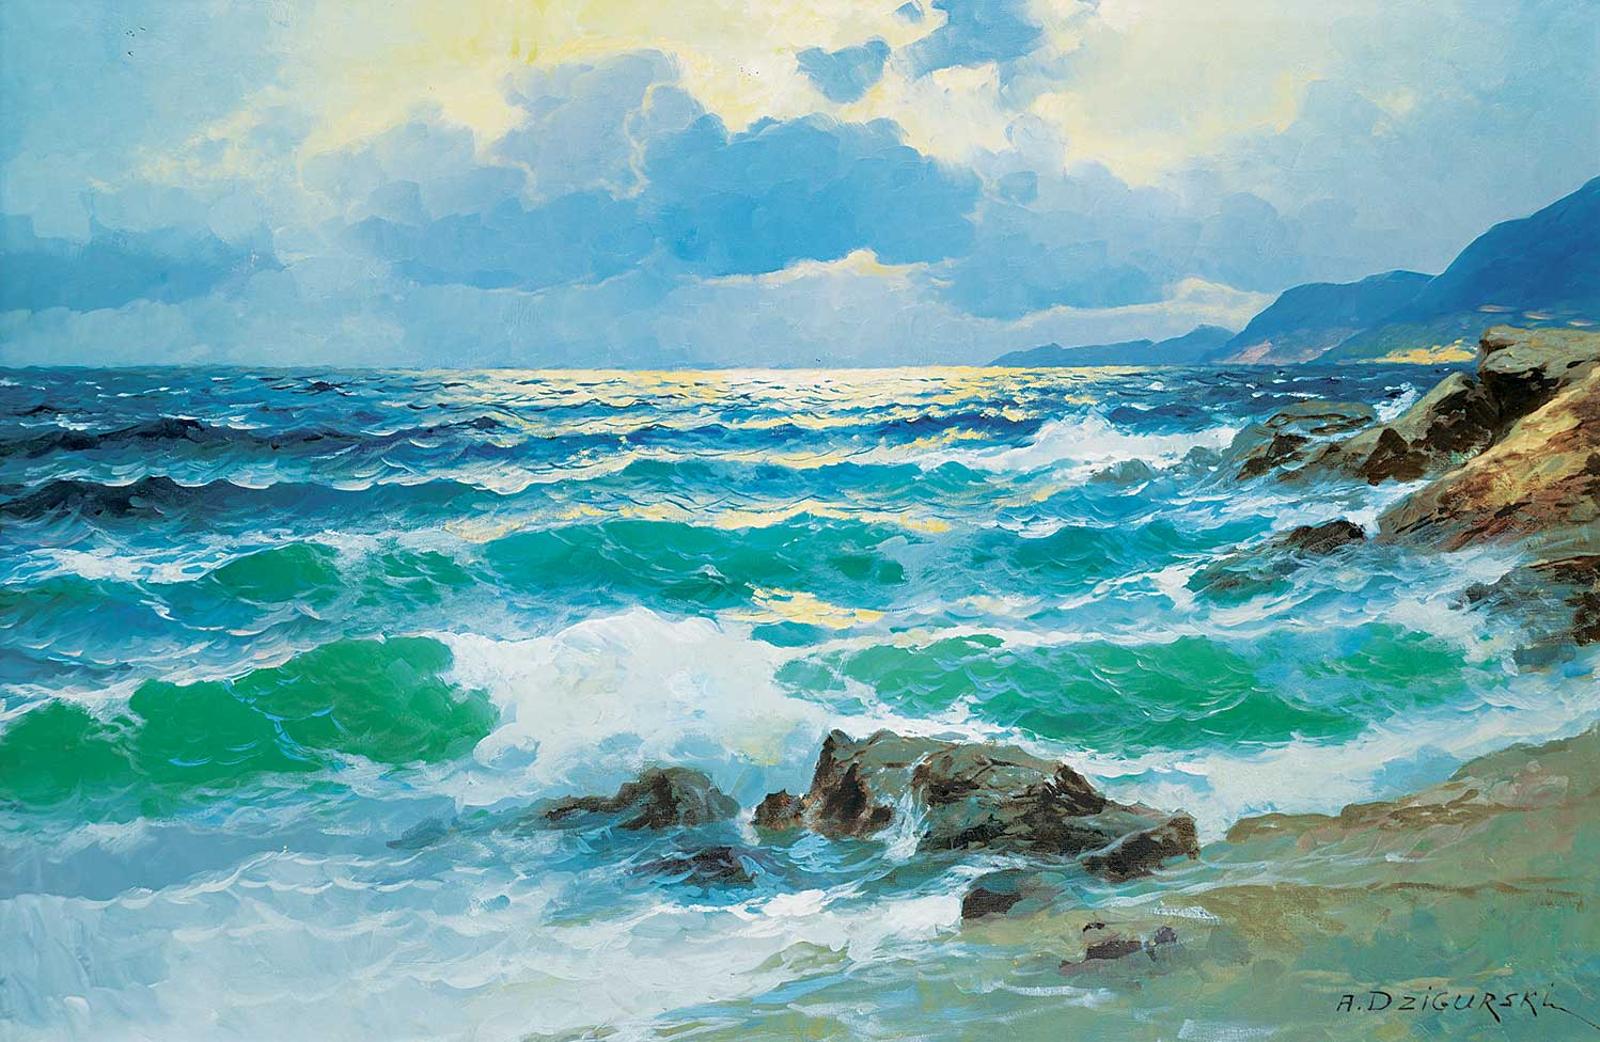 Alexander Dzigurski (1911-1995) - Untitled - Morning Seascape